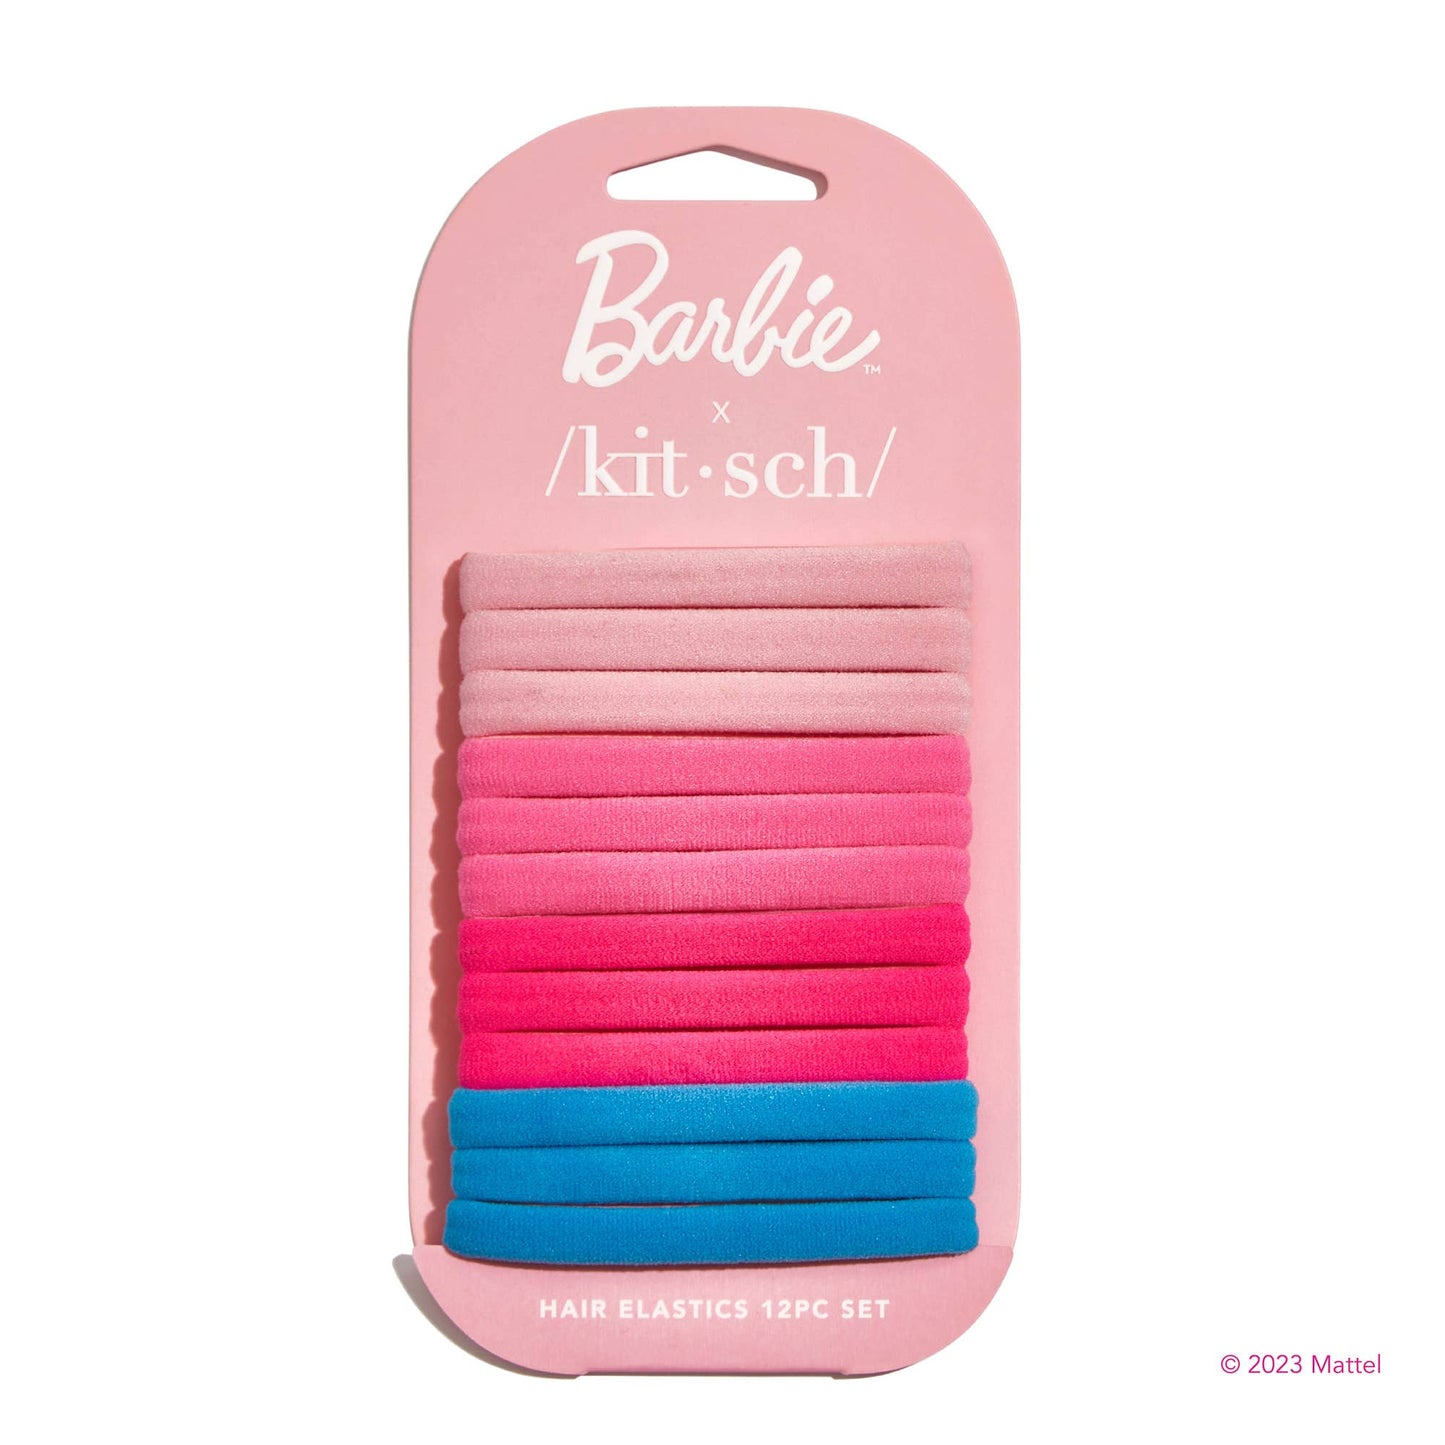 Barbie x kitsch Recycled Nylon Elastics 12pc